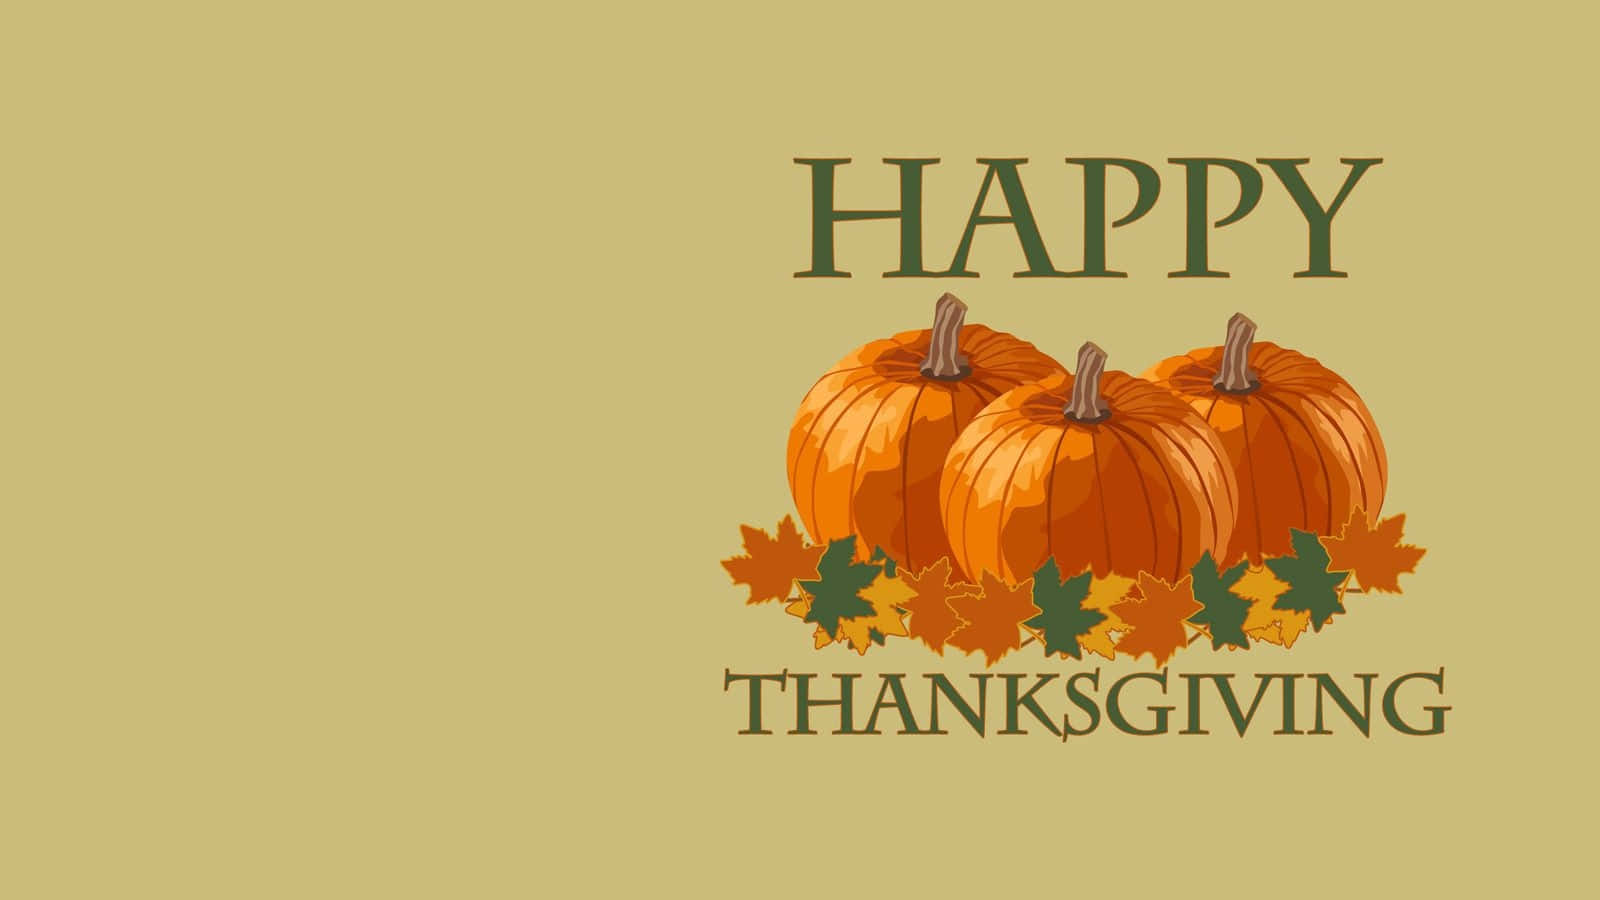 Three Pumpkins Happy Thanksgiving Greeting Card Background